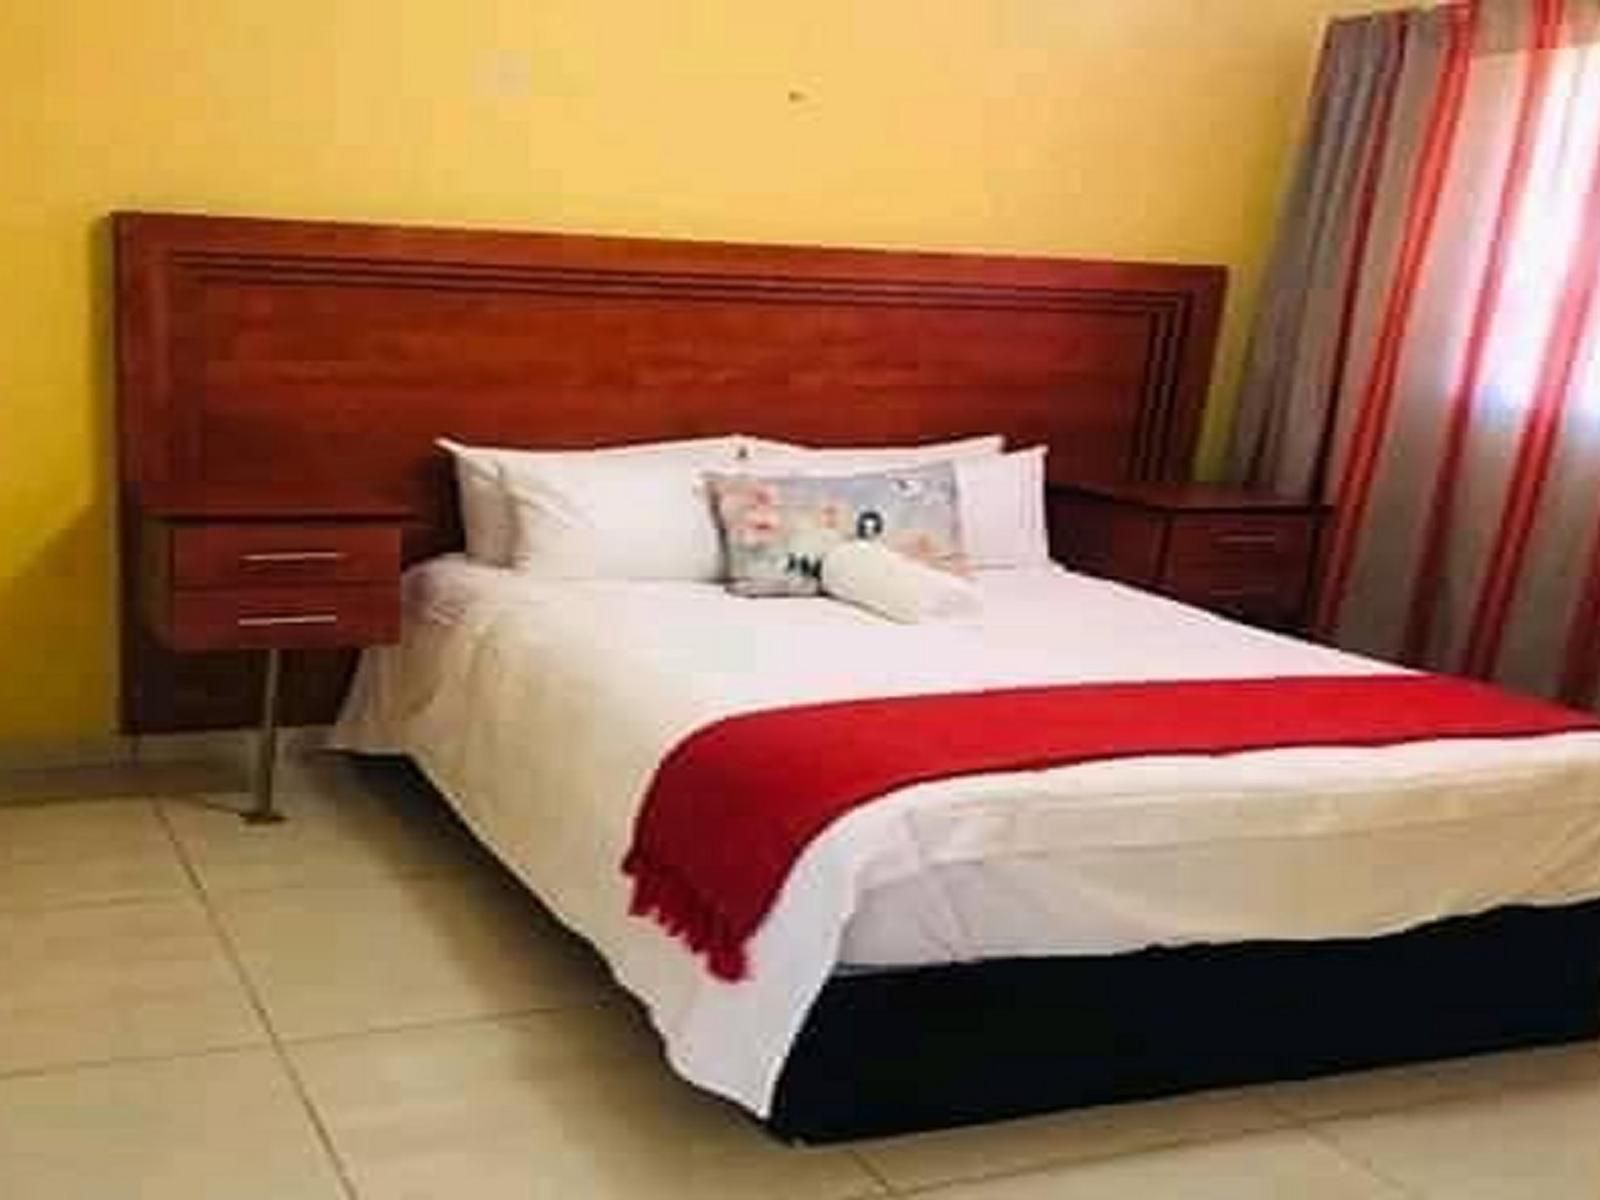 Tshinakie Guesthouse Sunnyside Pretoria Tshwane Gauteng South Africa Bedroom